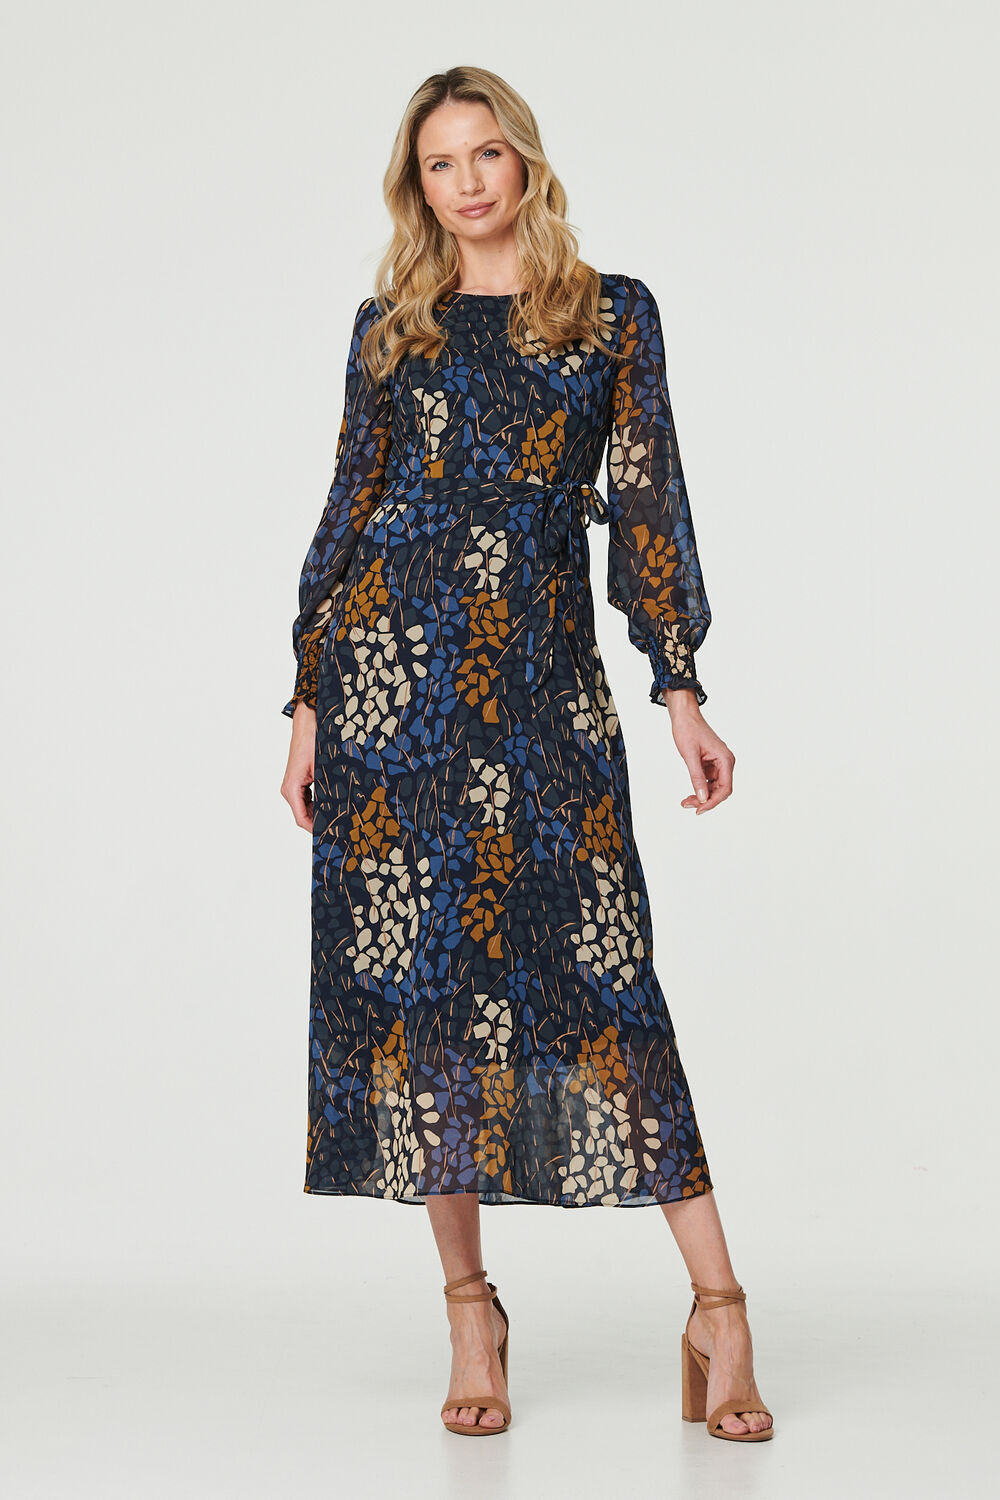 Izabel London Navy - Printed Long Puff Sleeve Midi Dress, Size: 18